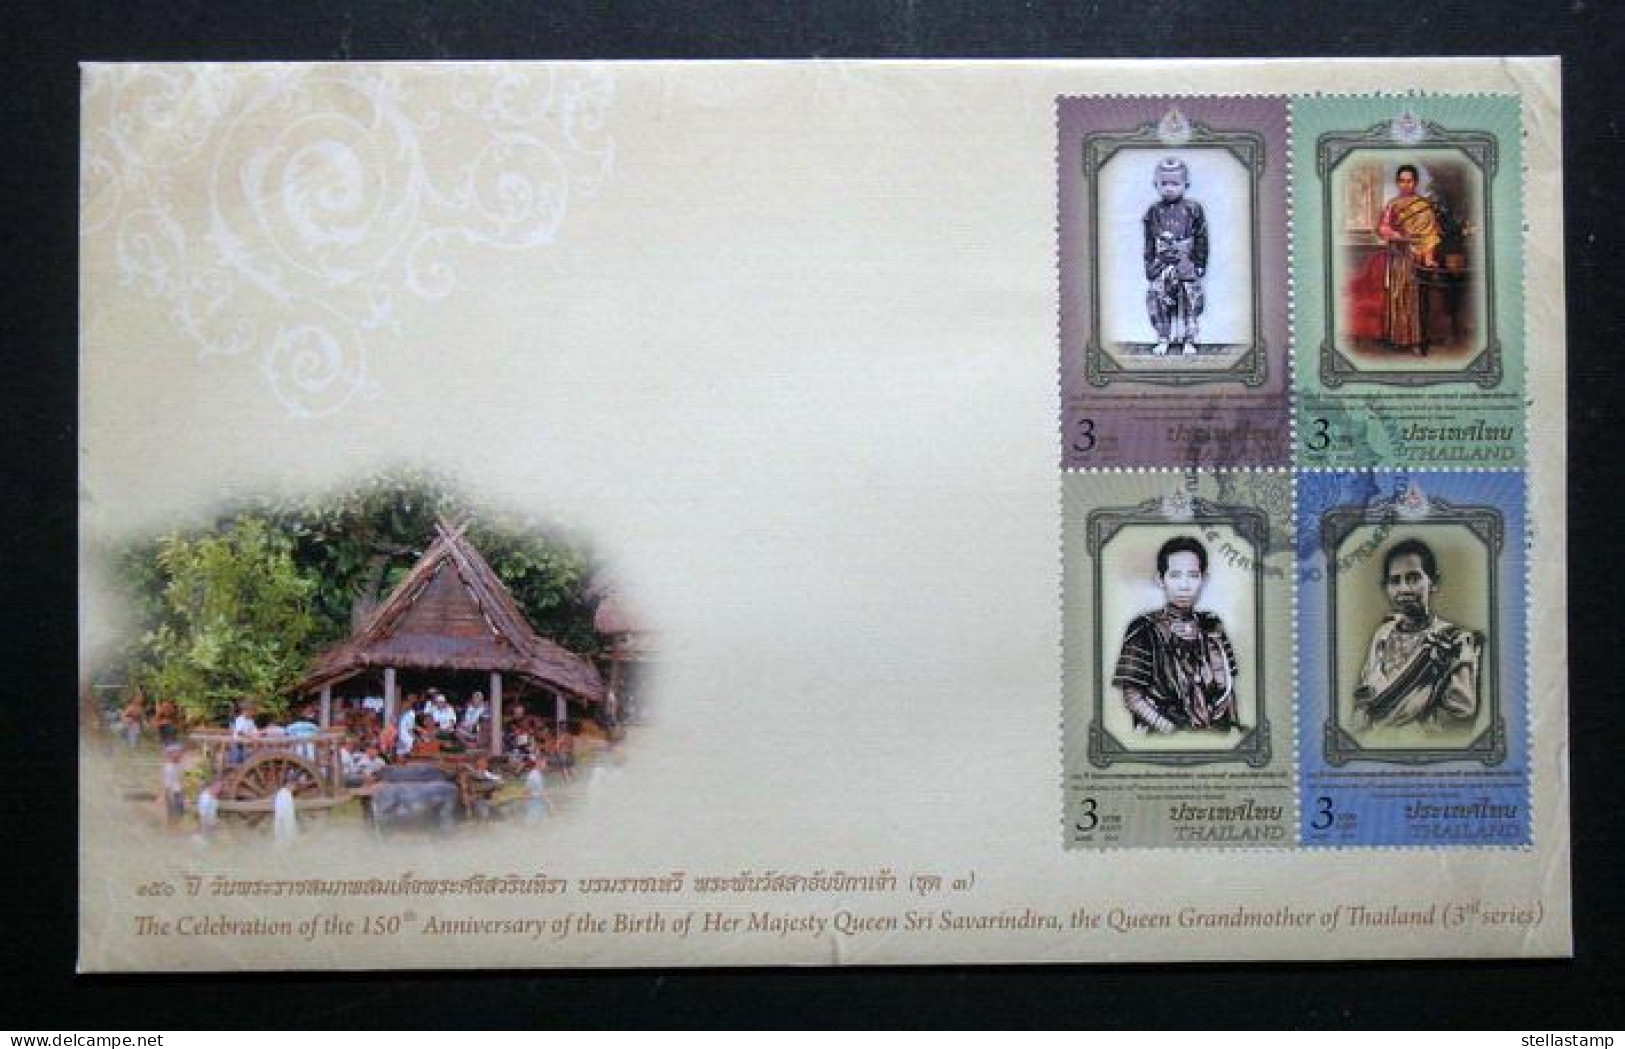 Thailand Stamp FDC 2012 150th HM Queen Grandmother Sri Savarindira 3rd - Thailand